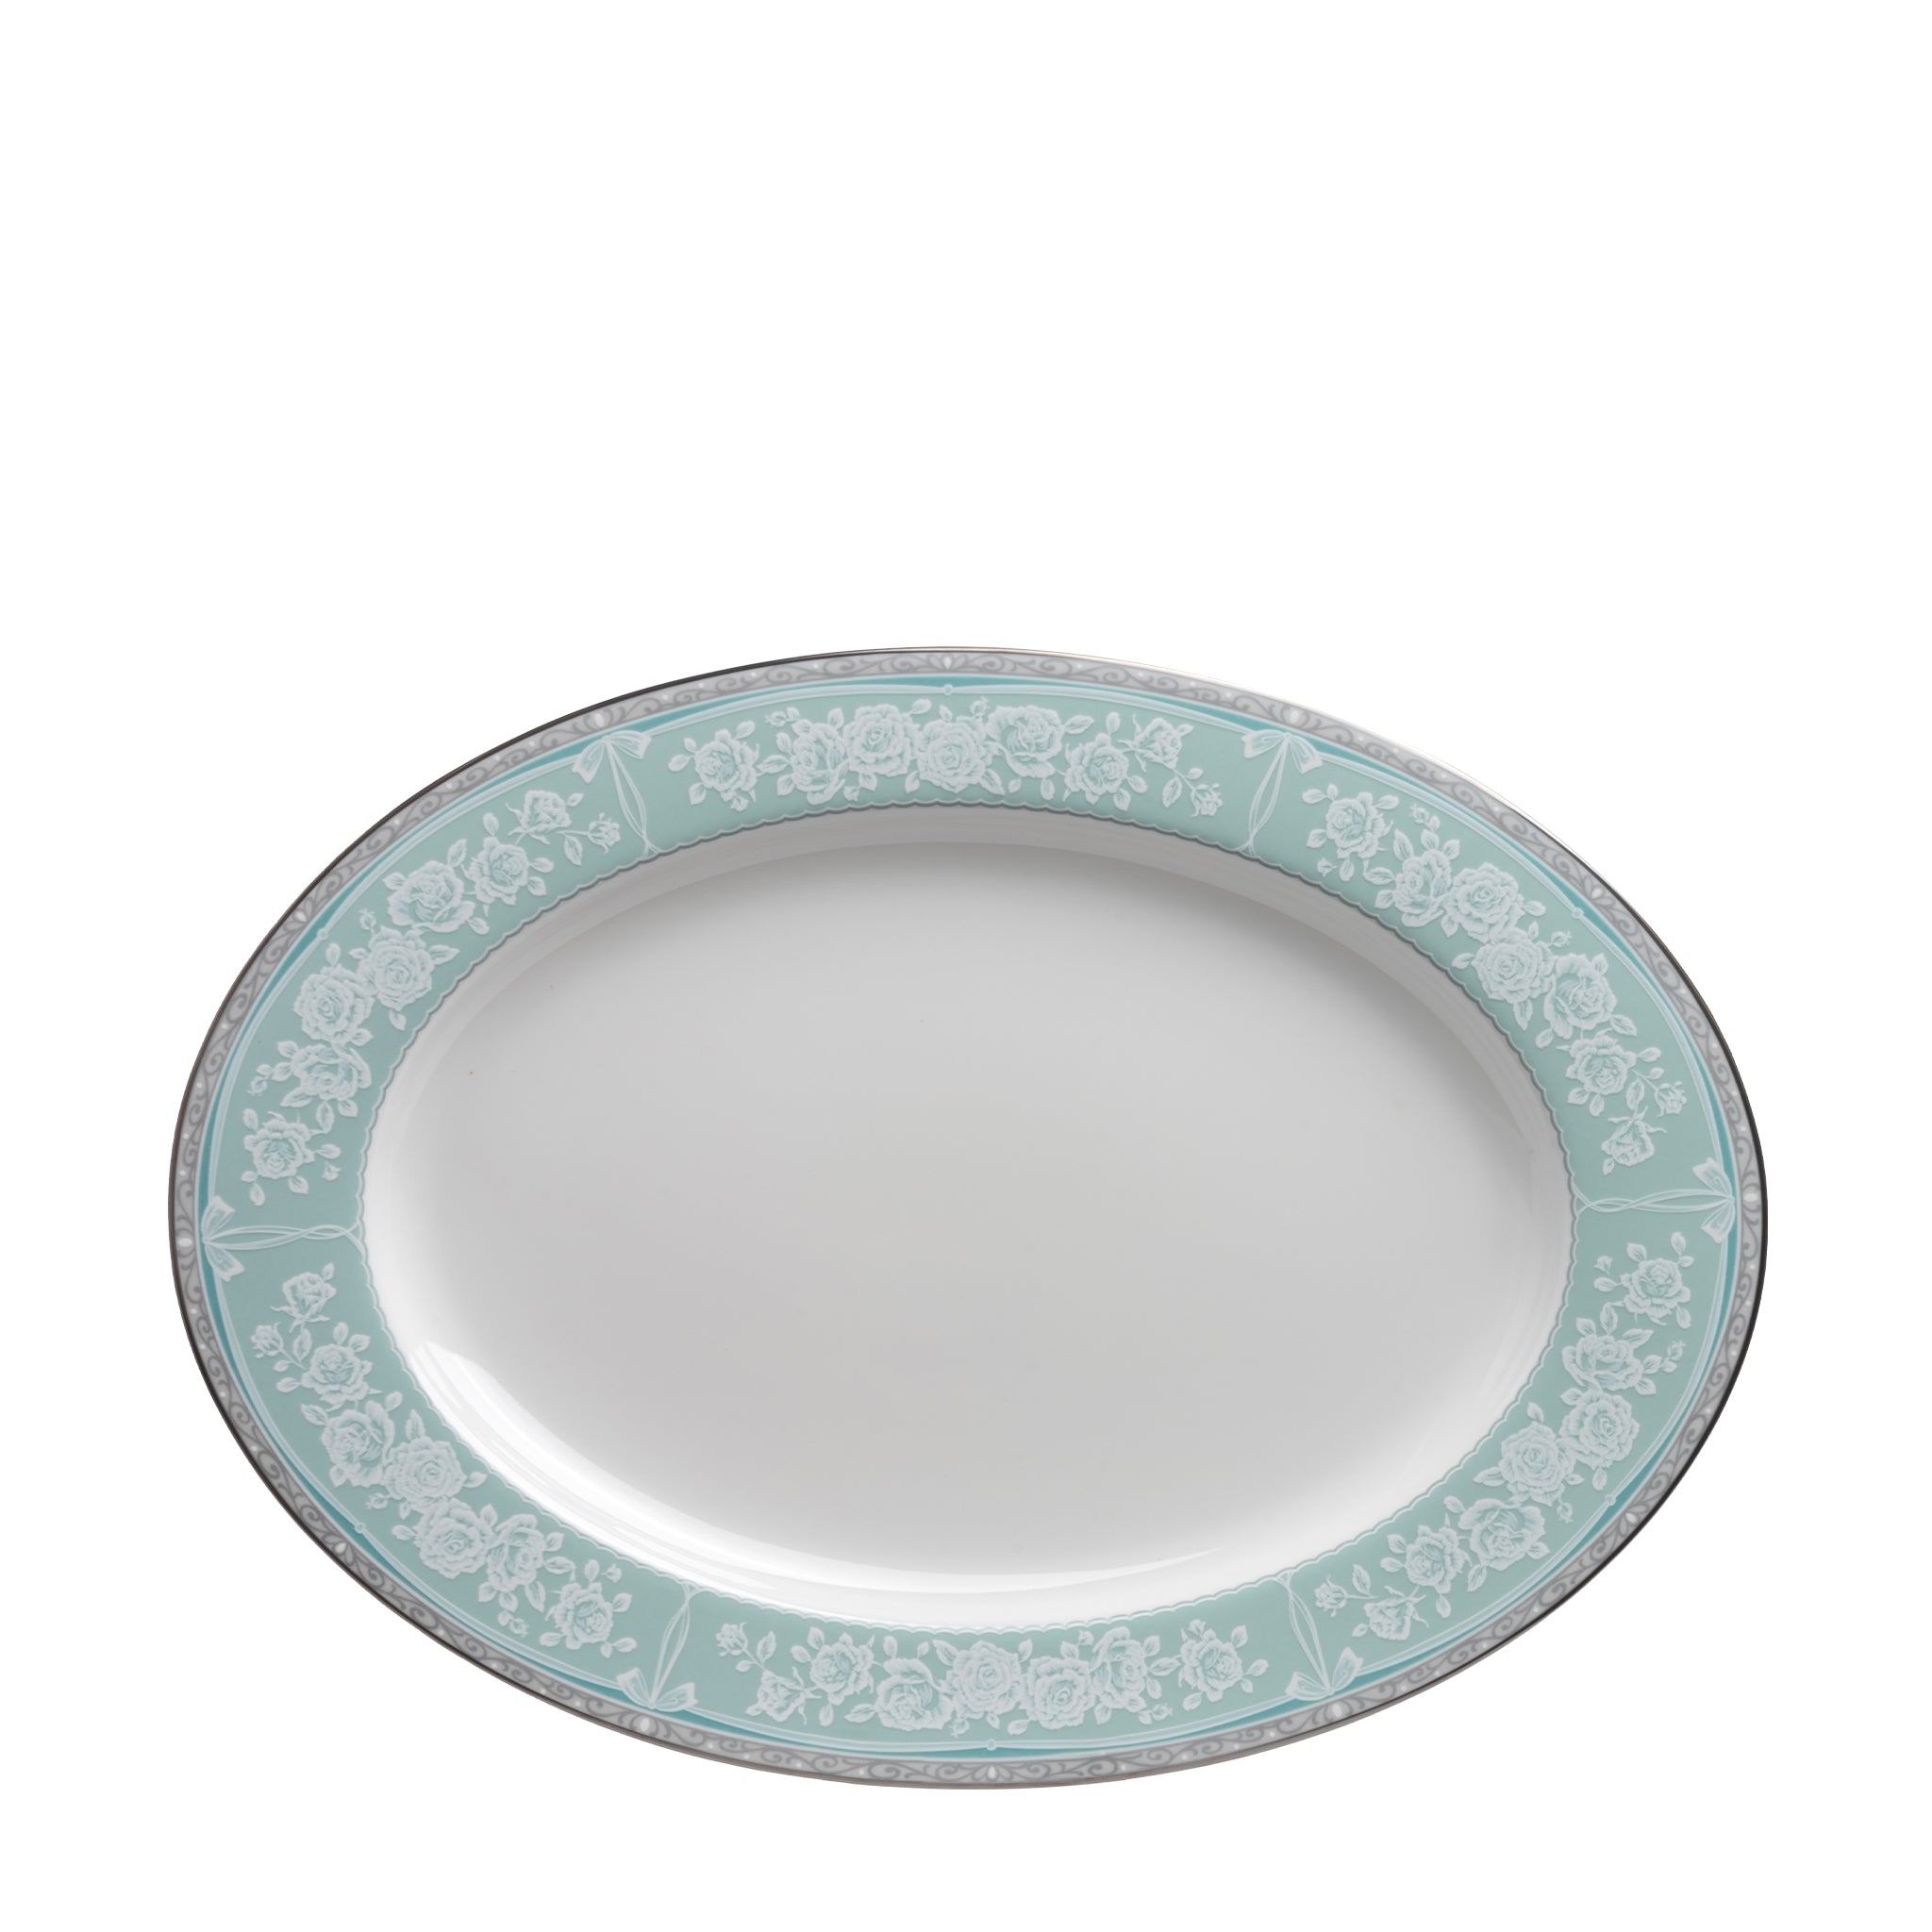 narumi graceair 38cm oval platter serving platters 